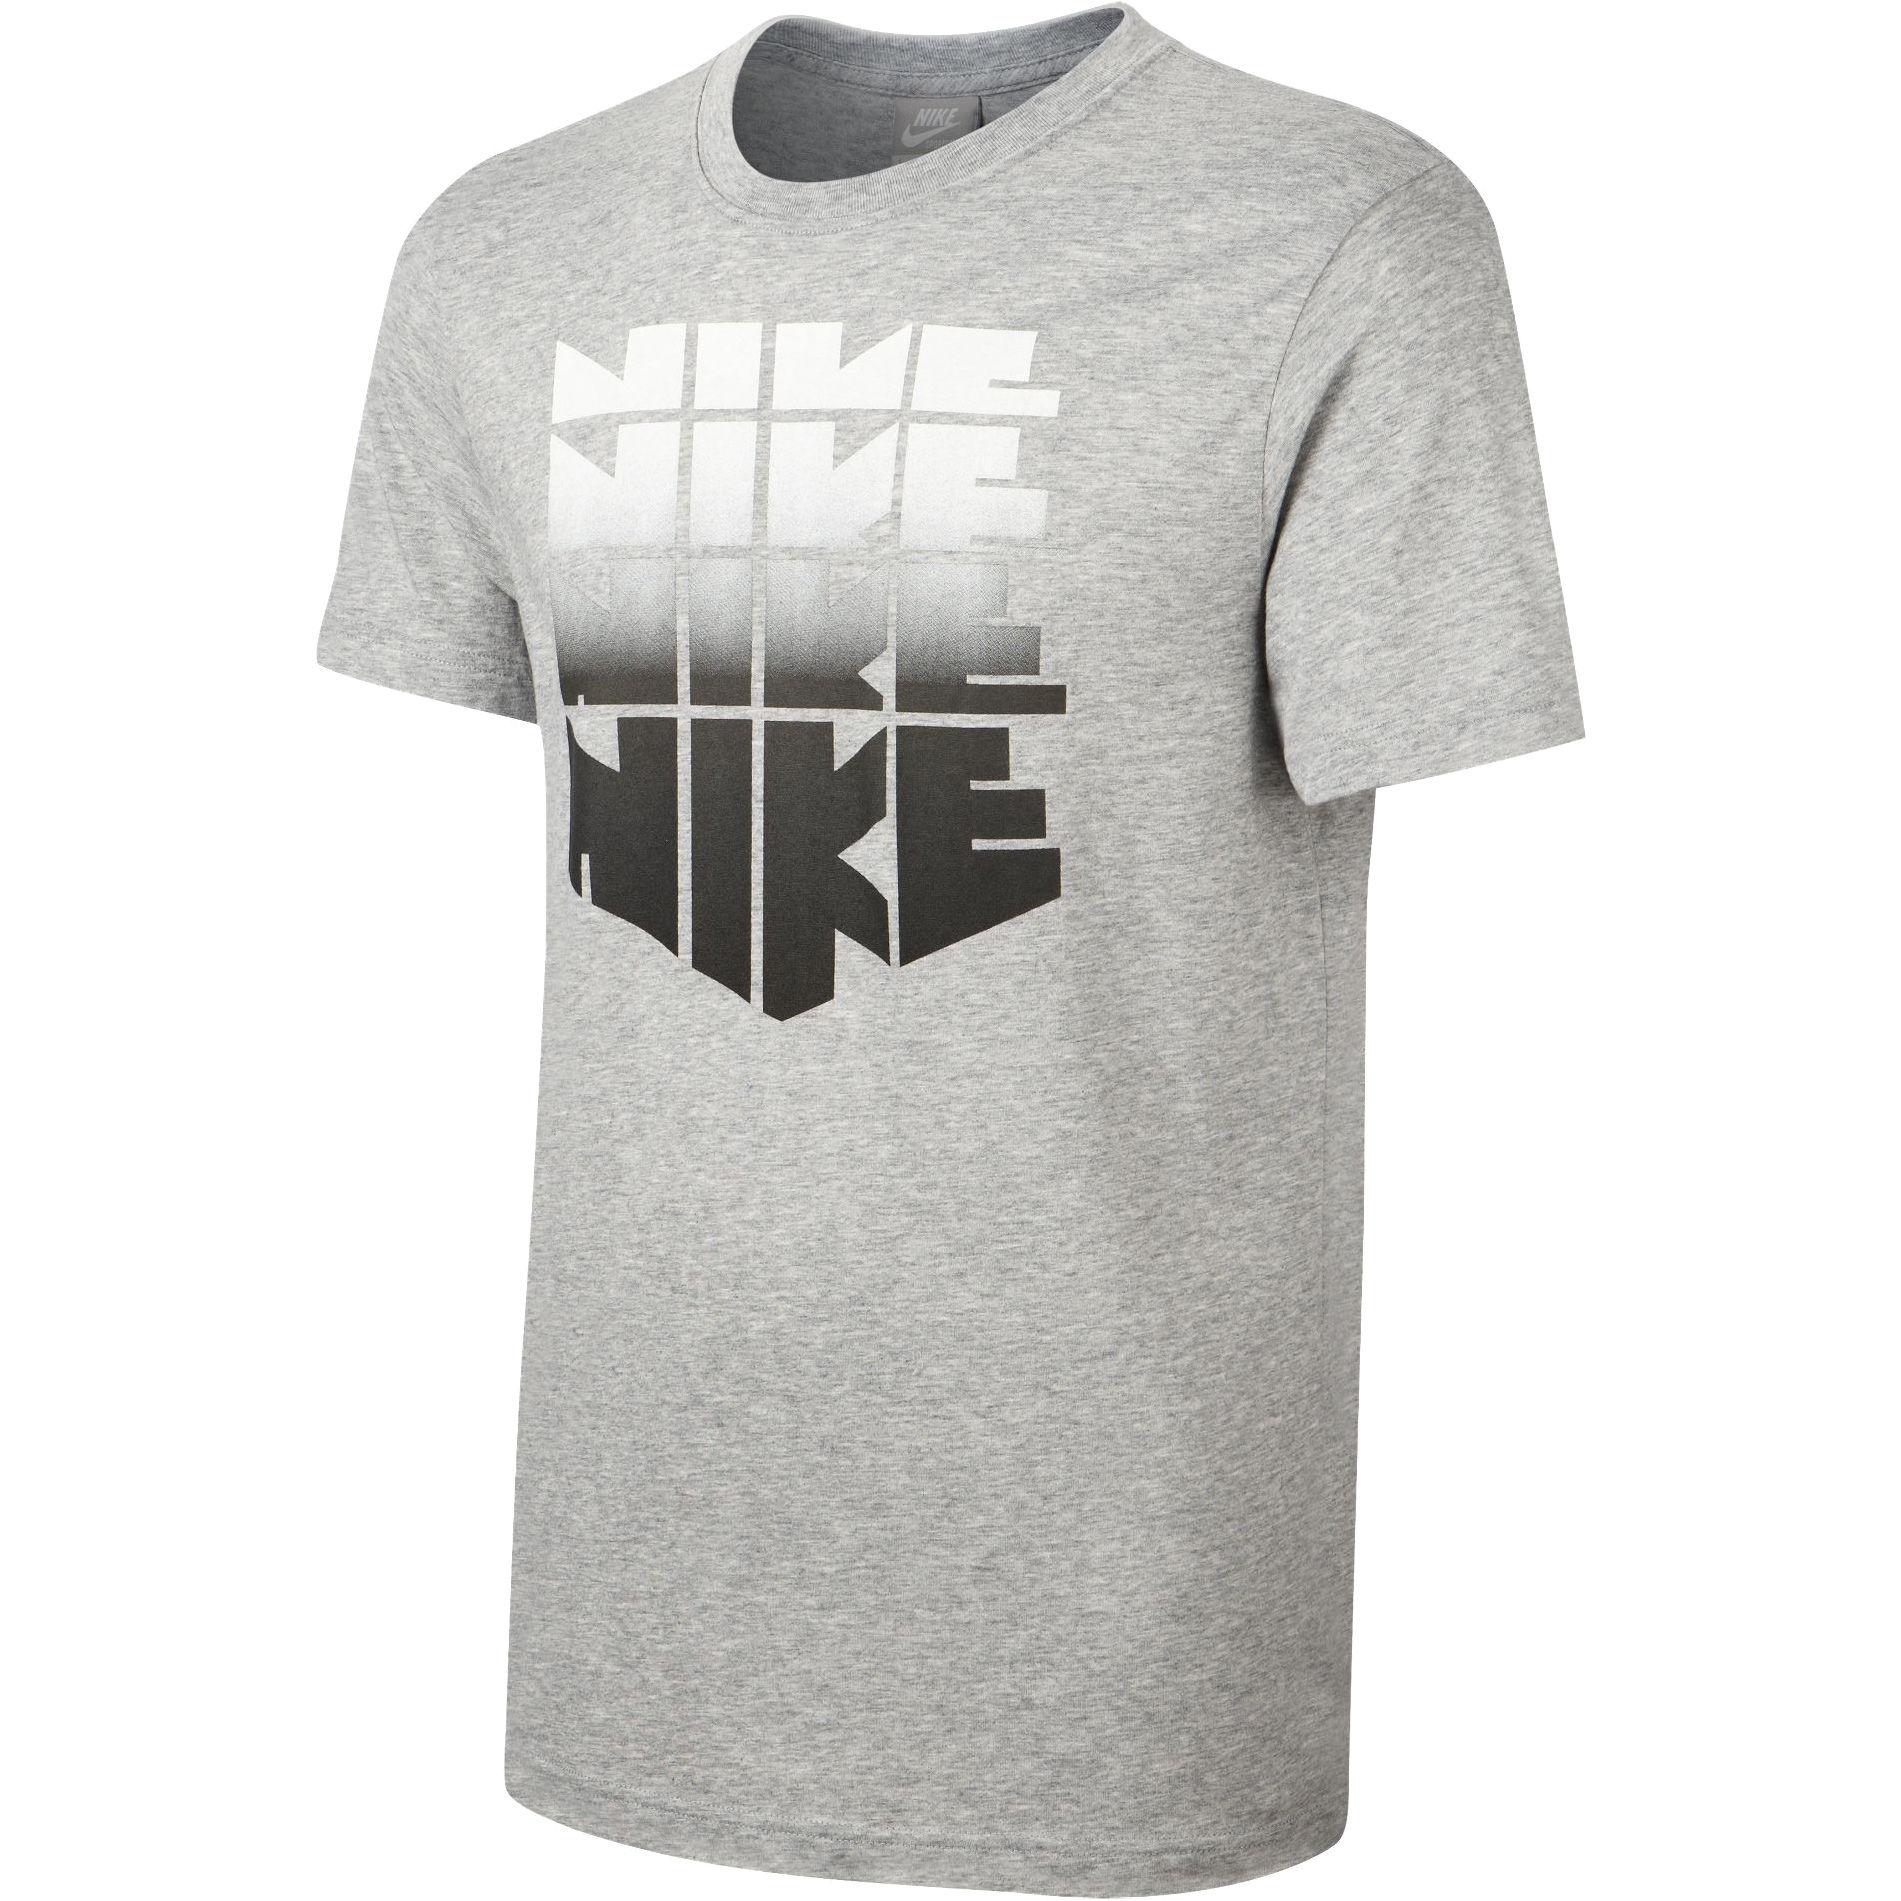 Foto Camiseta Nike - RU Hollister Sunset Stack - Small Grey foto 333293